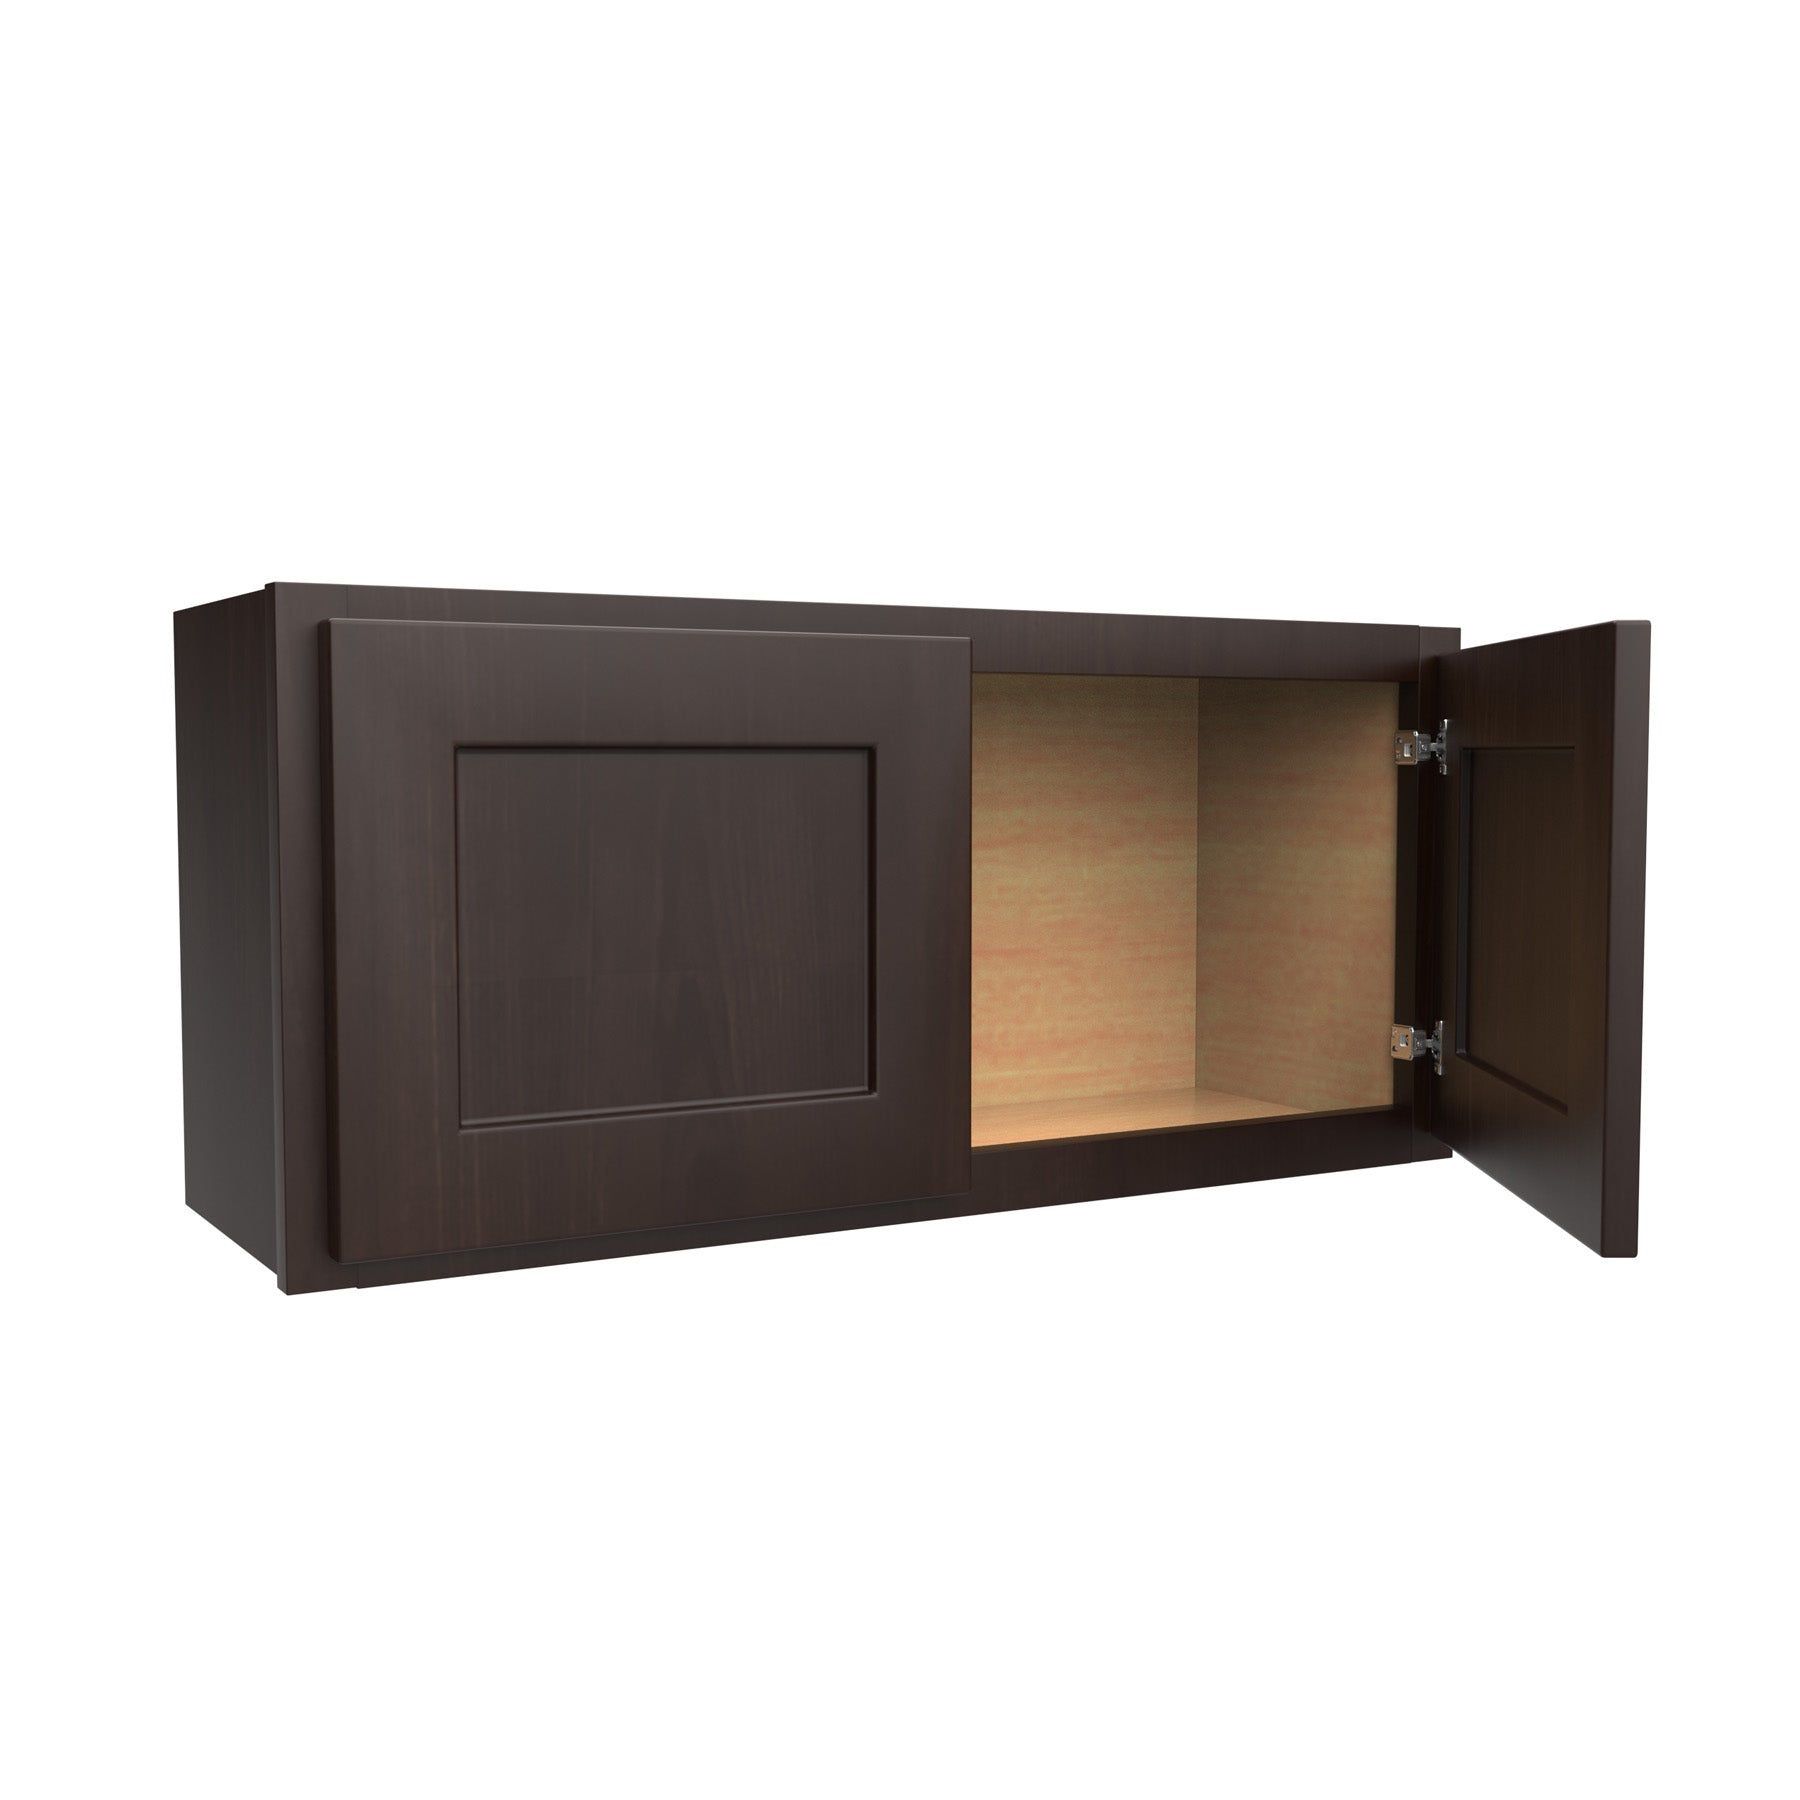 2 Door Wall Cabinet | 33"W x 15"H x 12"D | RTA Luxor Espresso